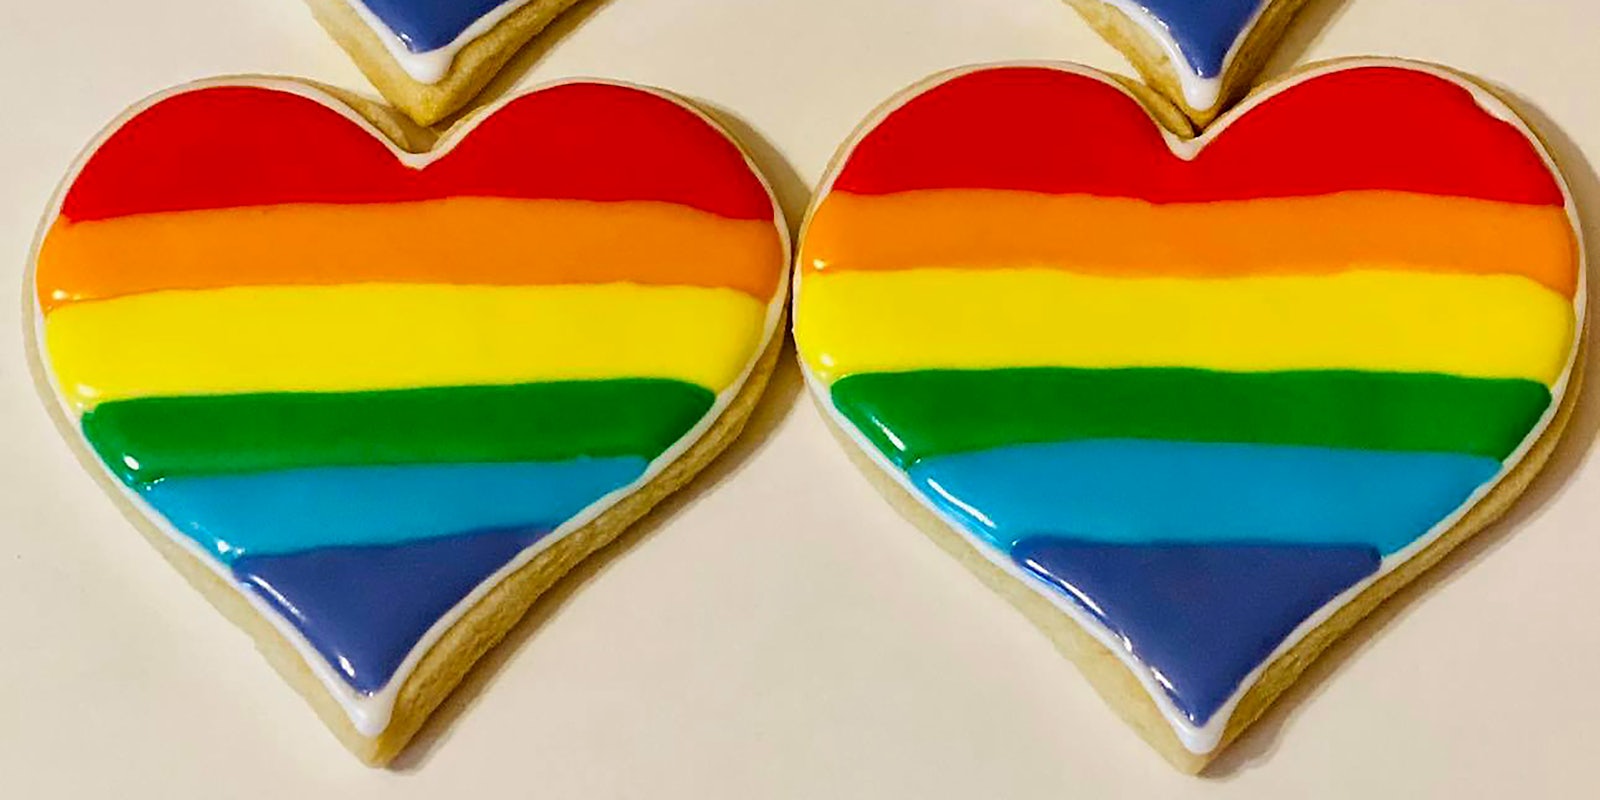 Rainbow cookies.